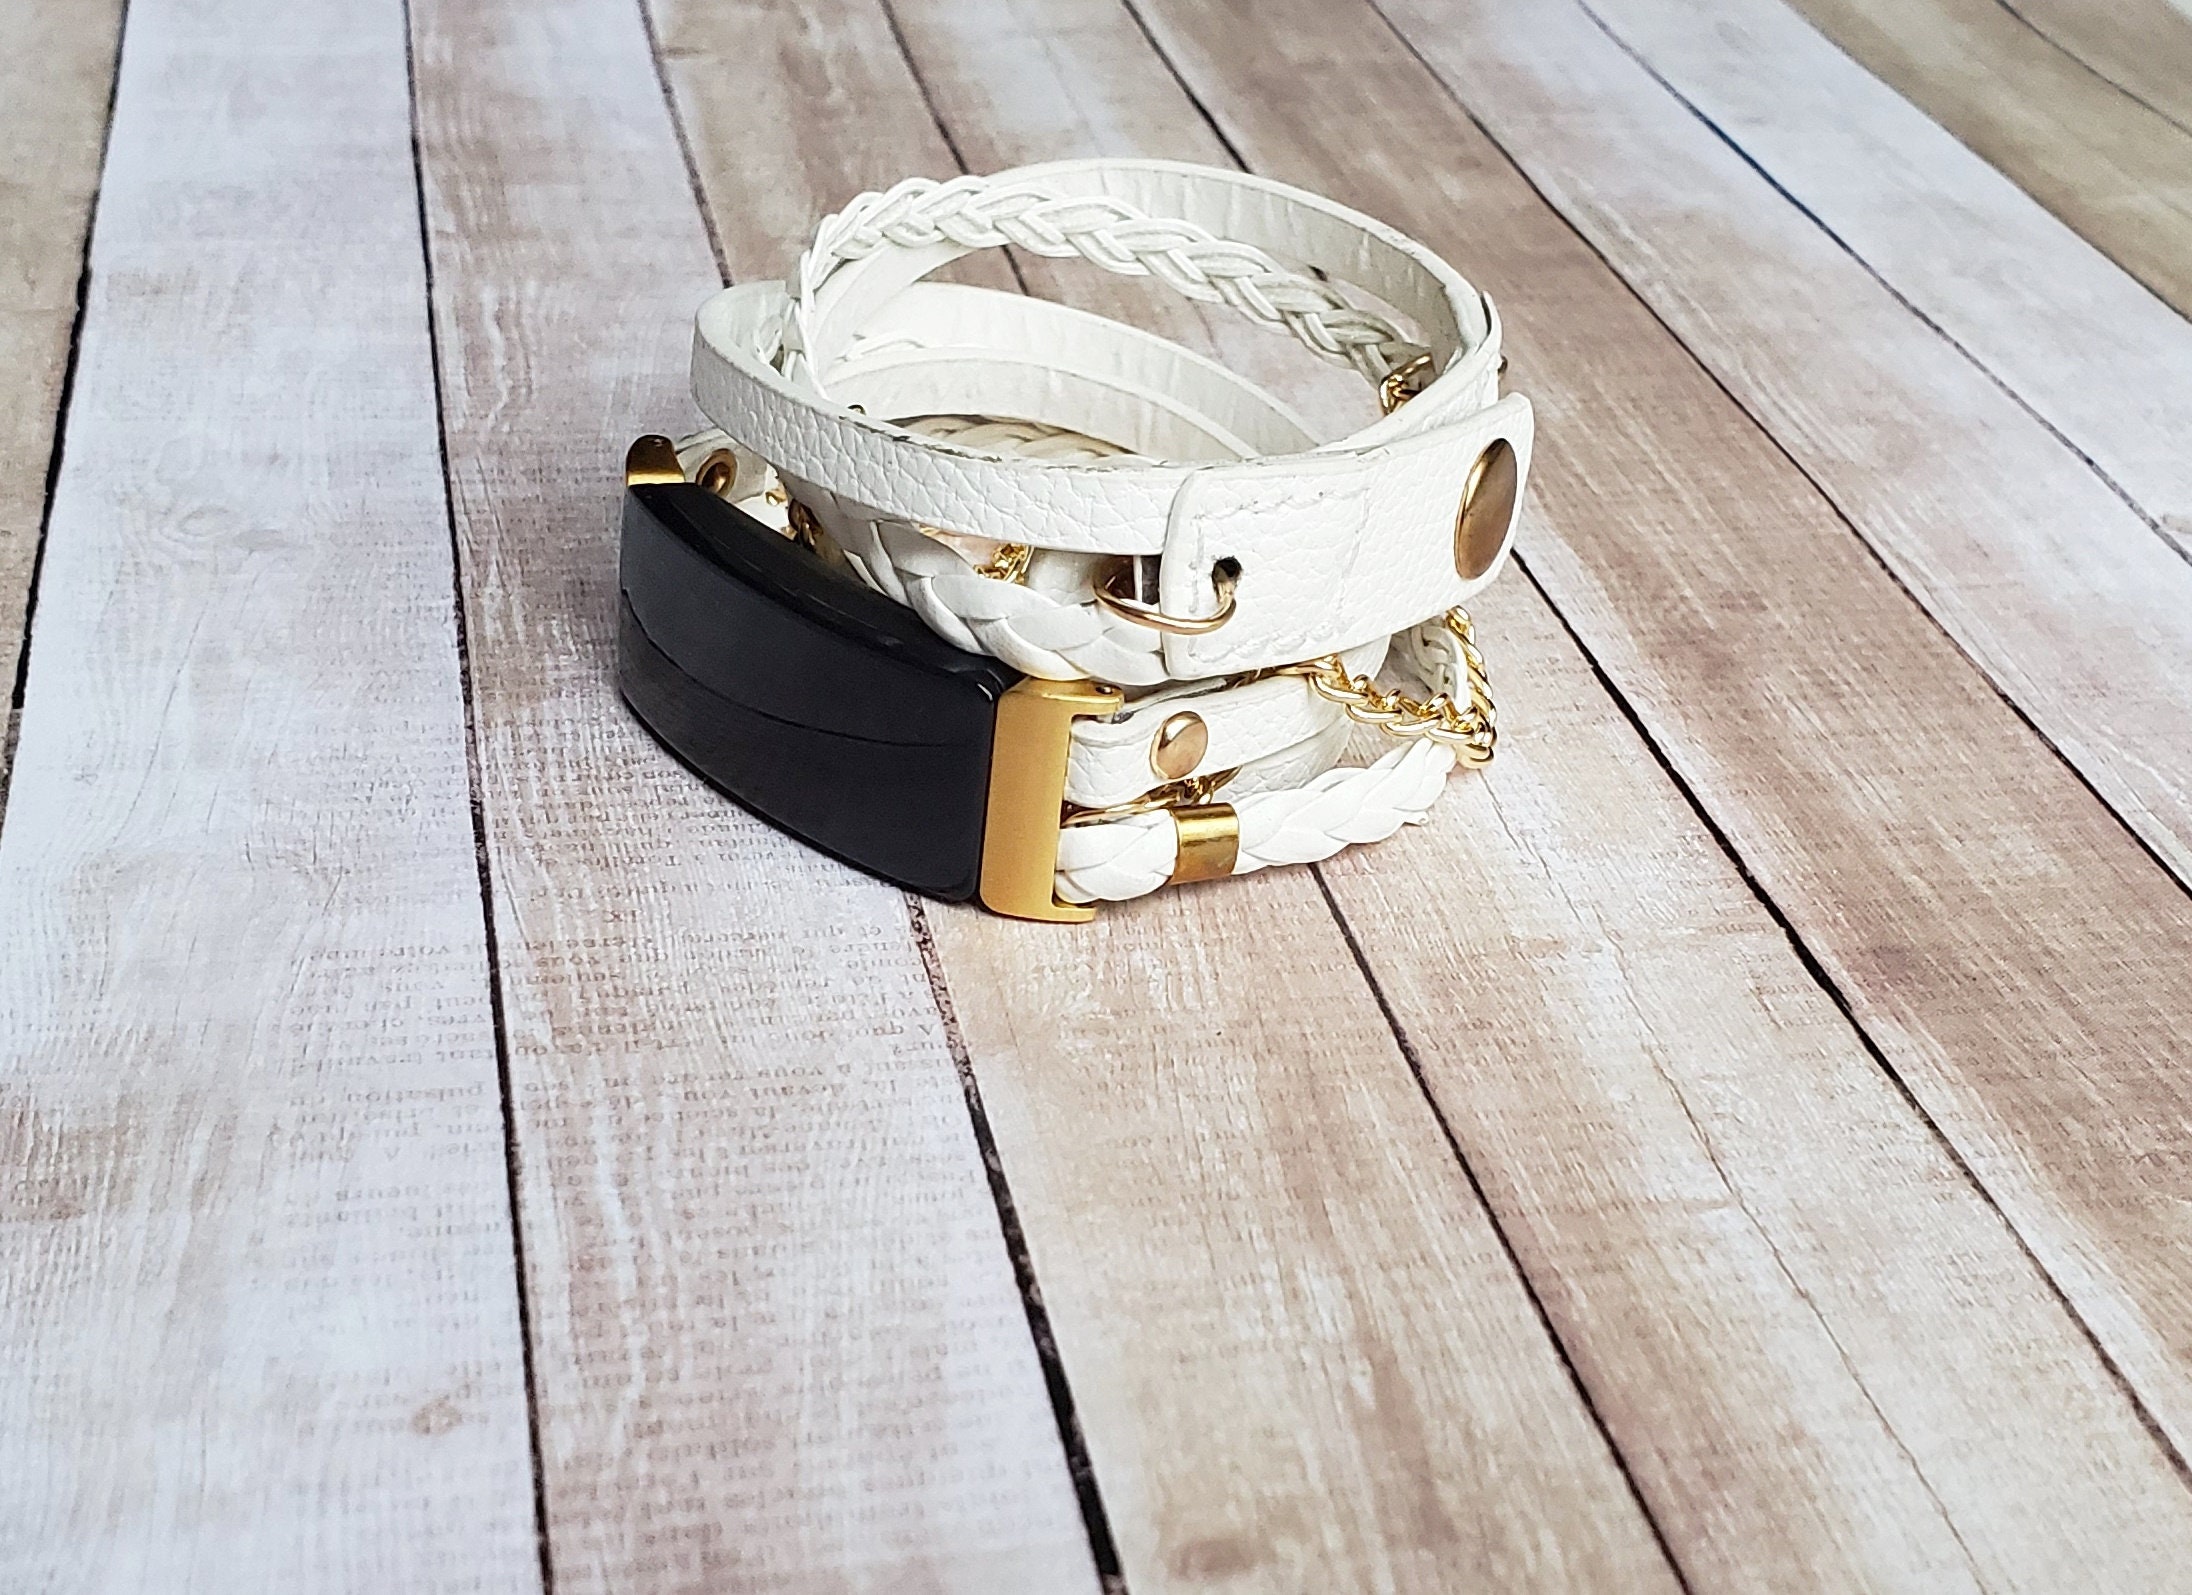 Black Vegan Leather Bracelet Gold Bangle with Lock Charm for Fitbit Lu